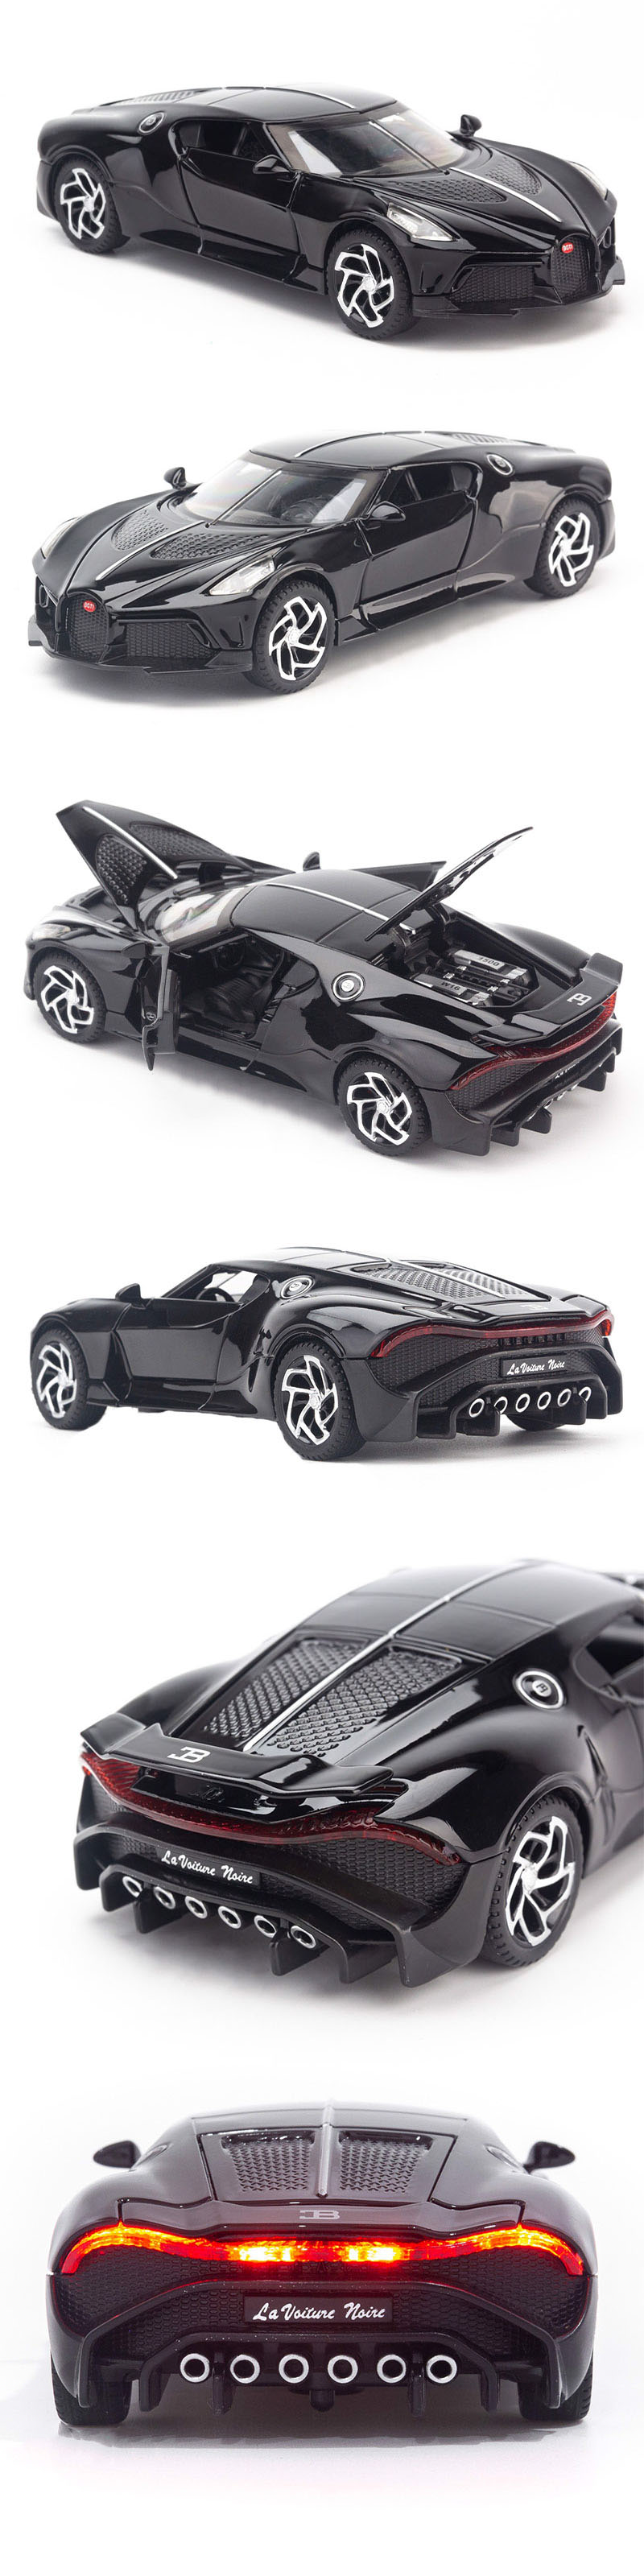 Chia sẻ 100 xe bugatti la voiture noire tuyệt vời nhất  NEC